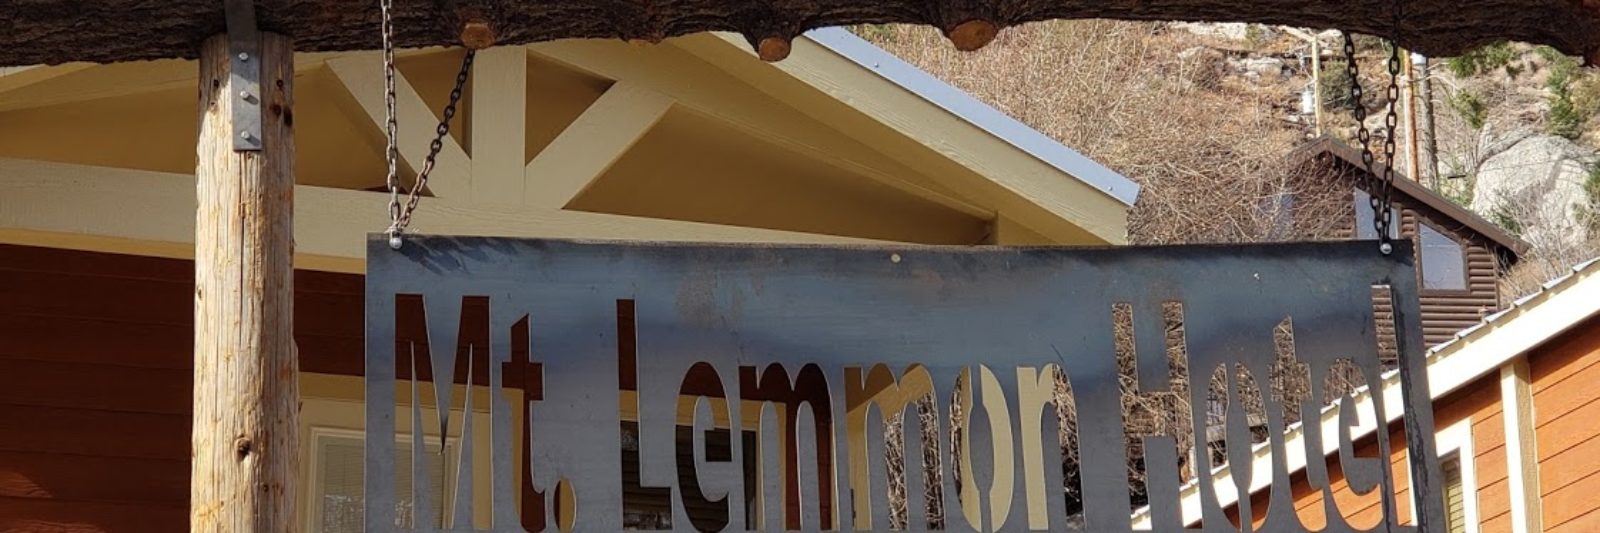 Mt Lemmon Hotel Sign